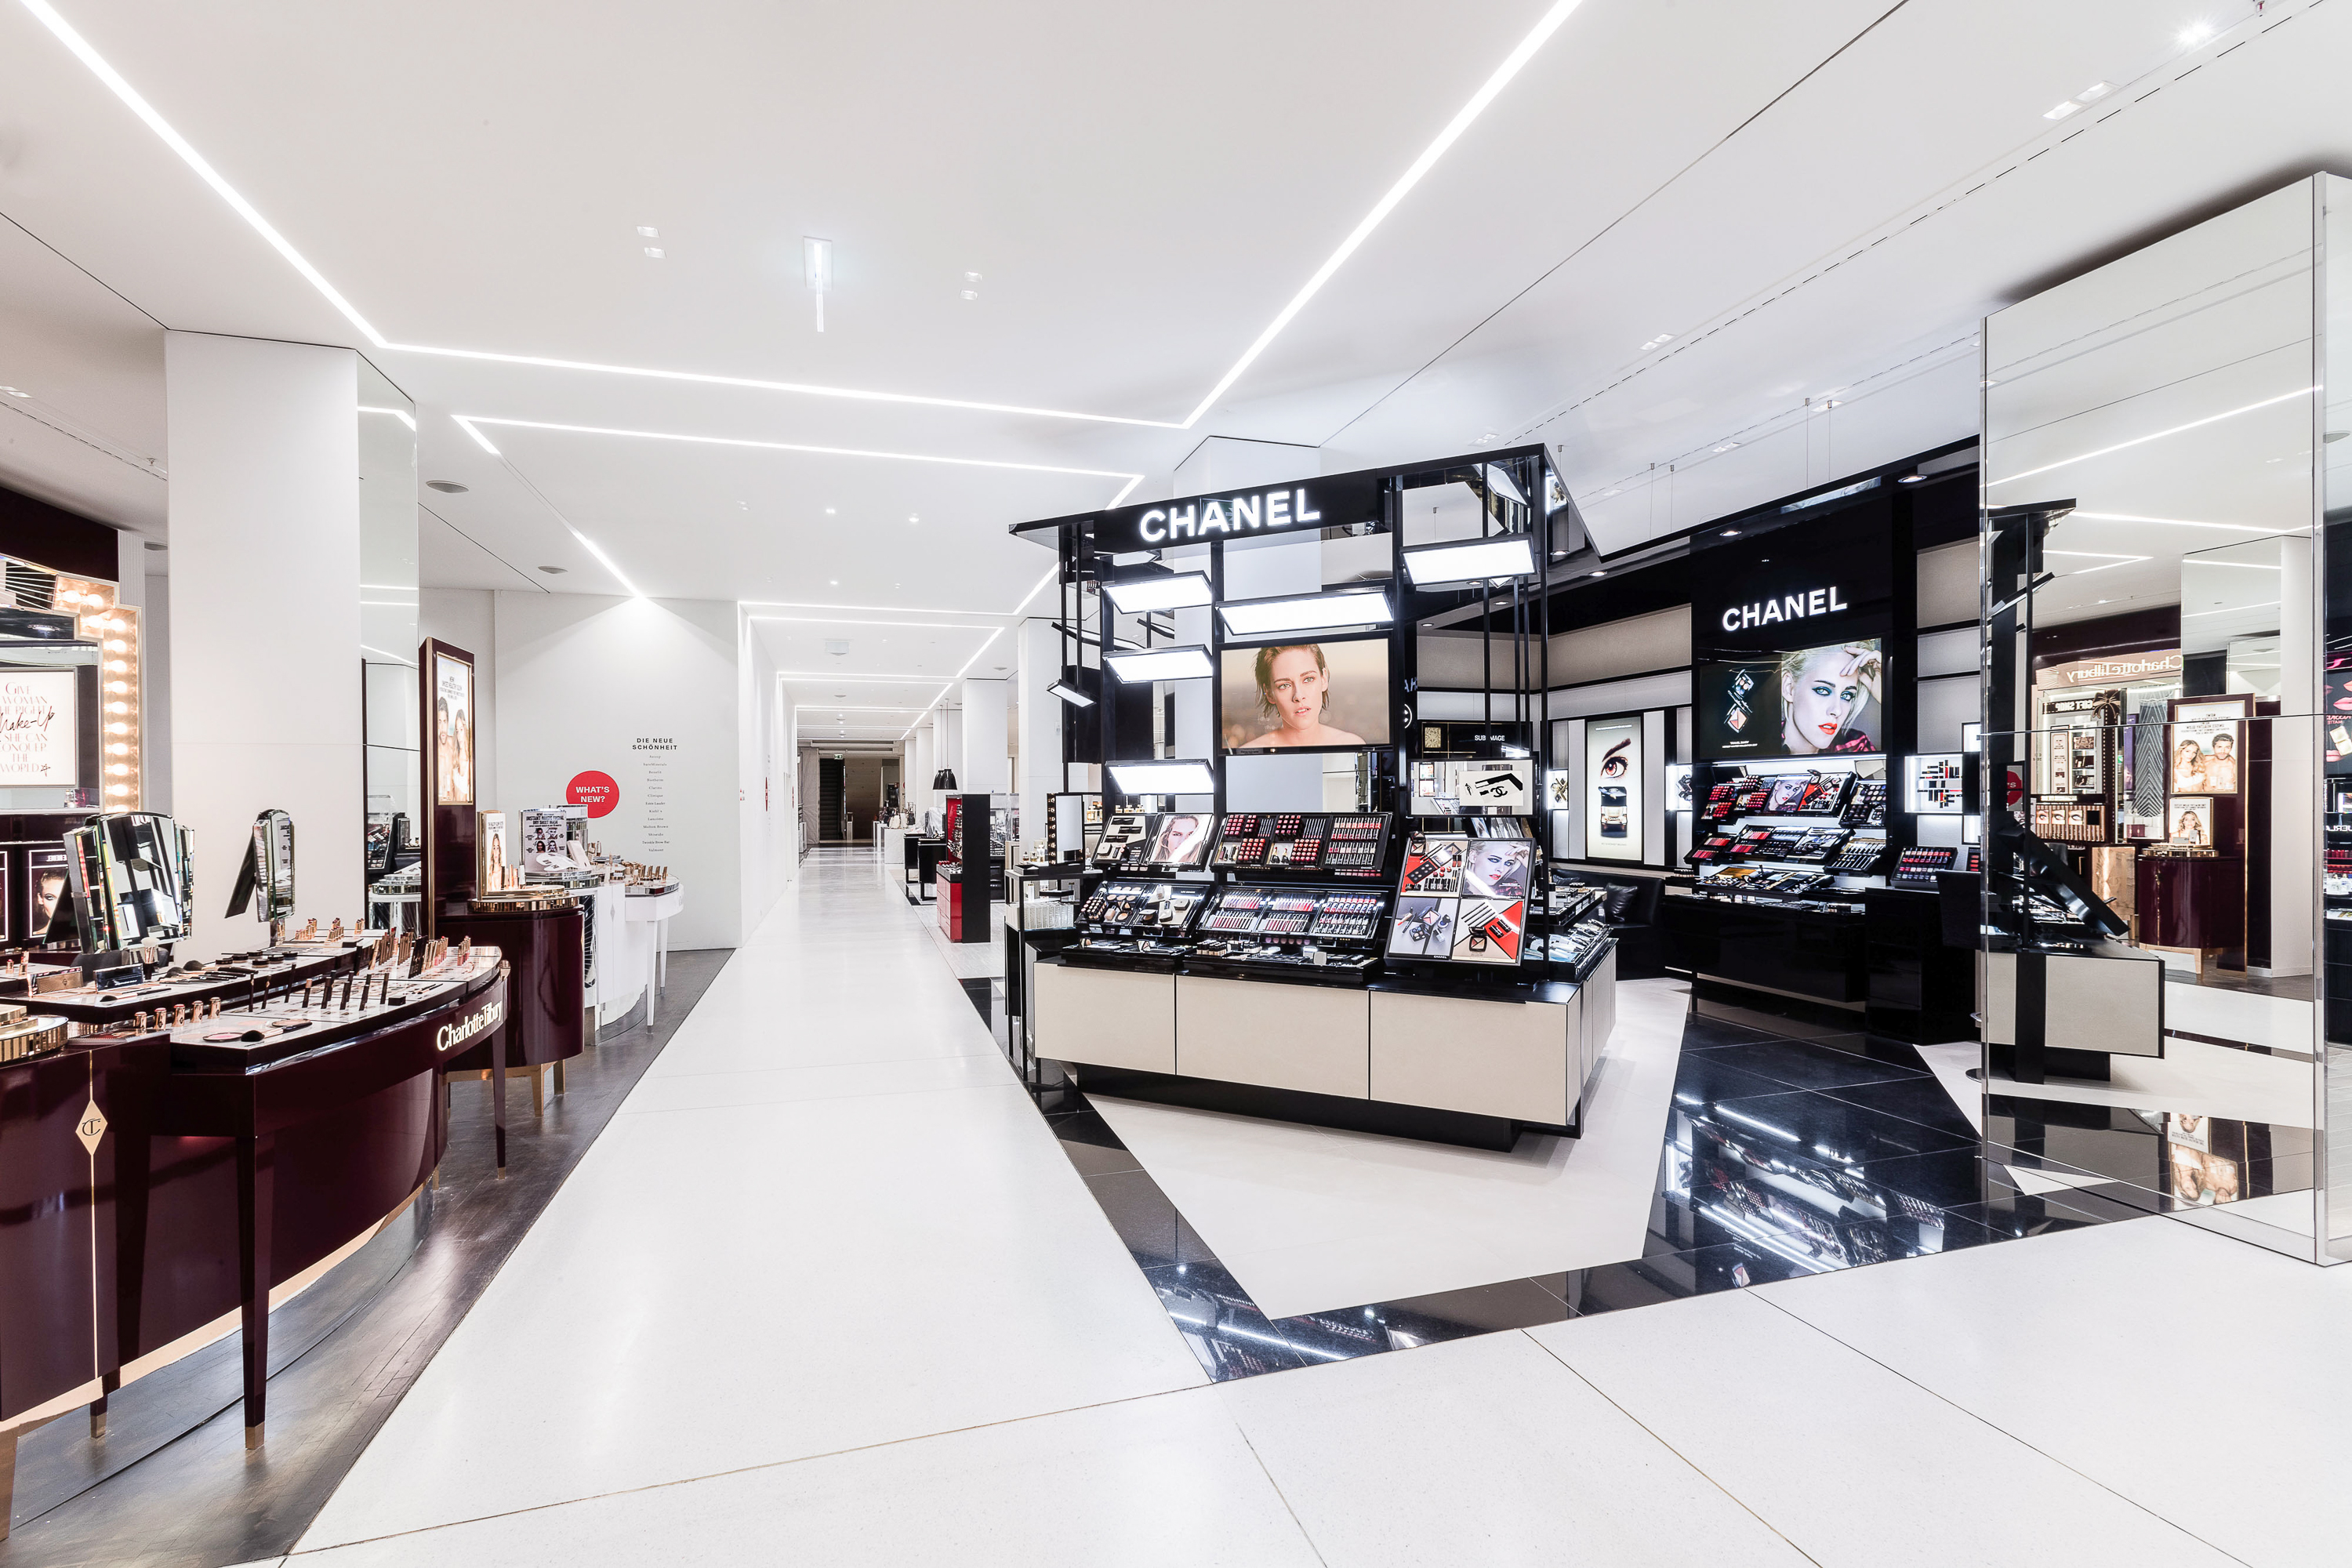 Alsterhaus Hamburg/ Chanel Counter - Retail-Imaging